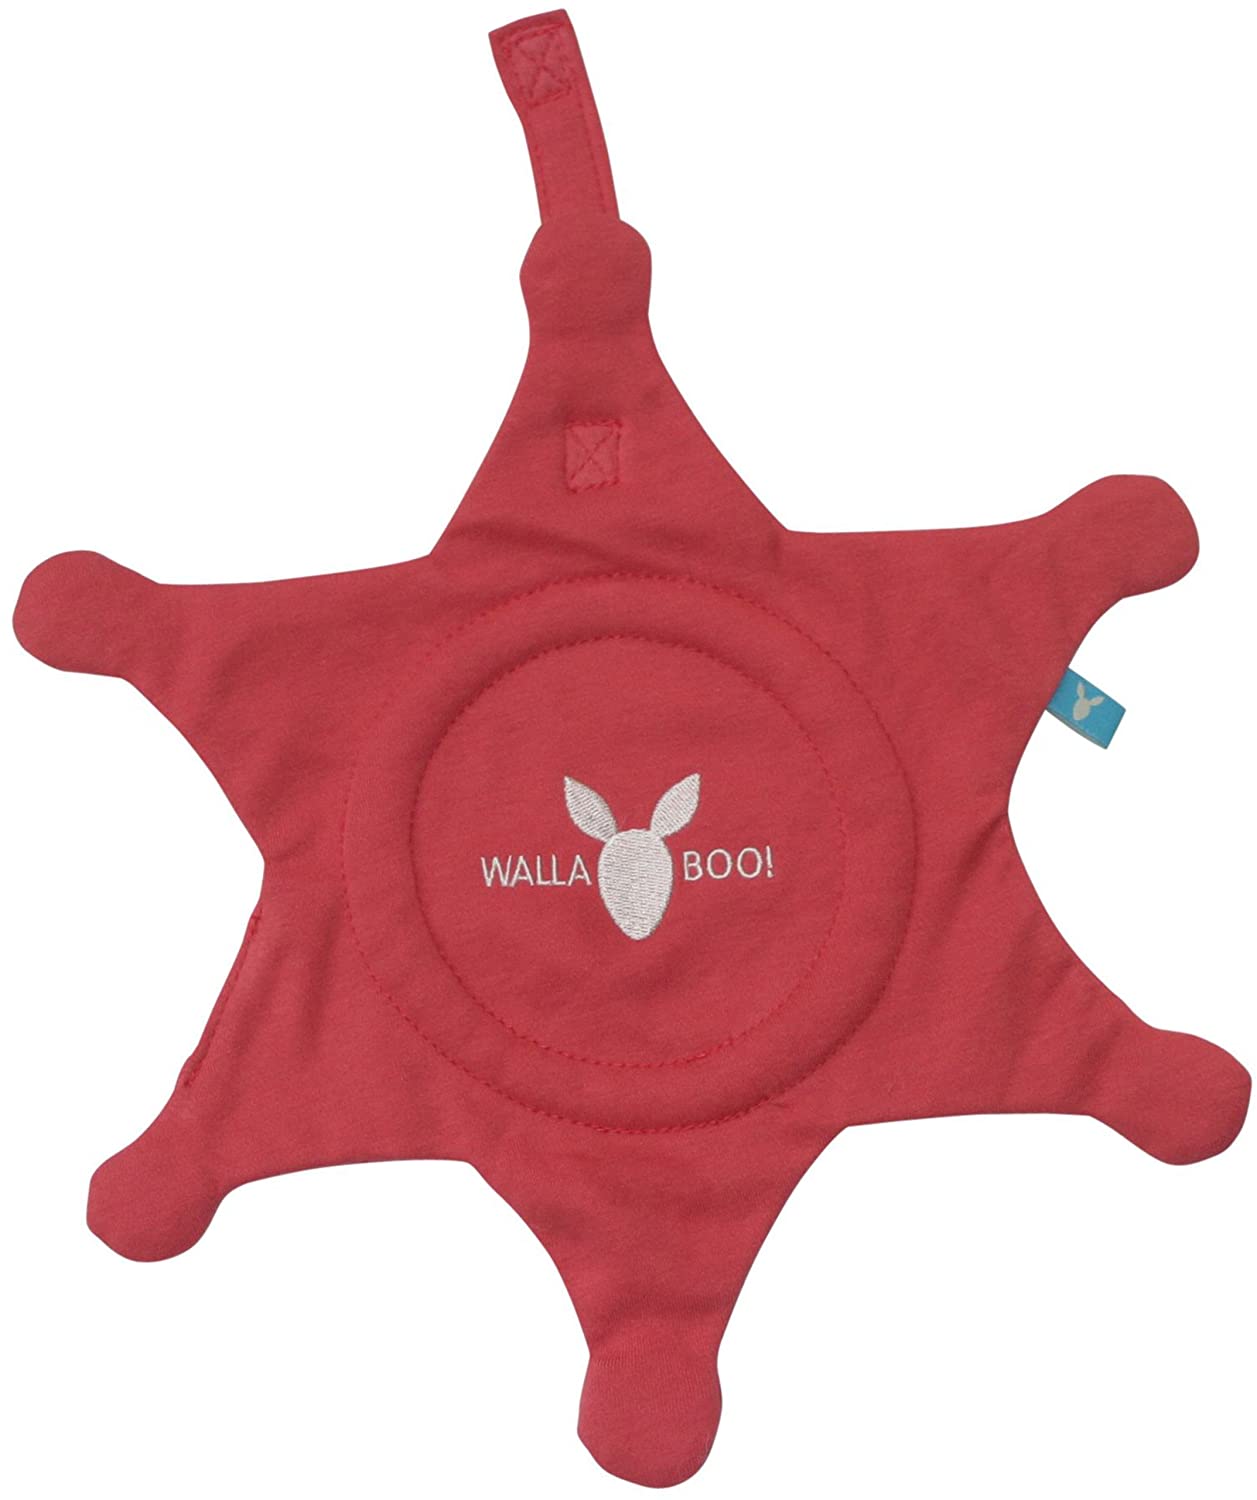 Wallaboo Security Blanket Poppy Red Comforter